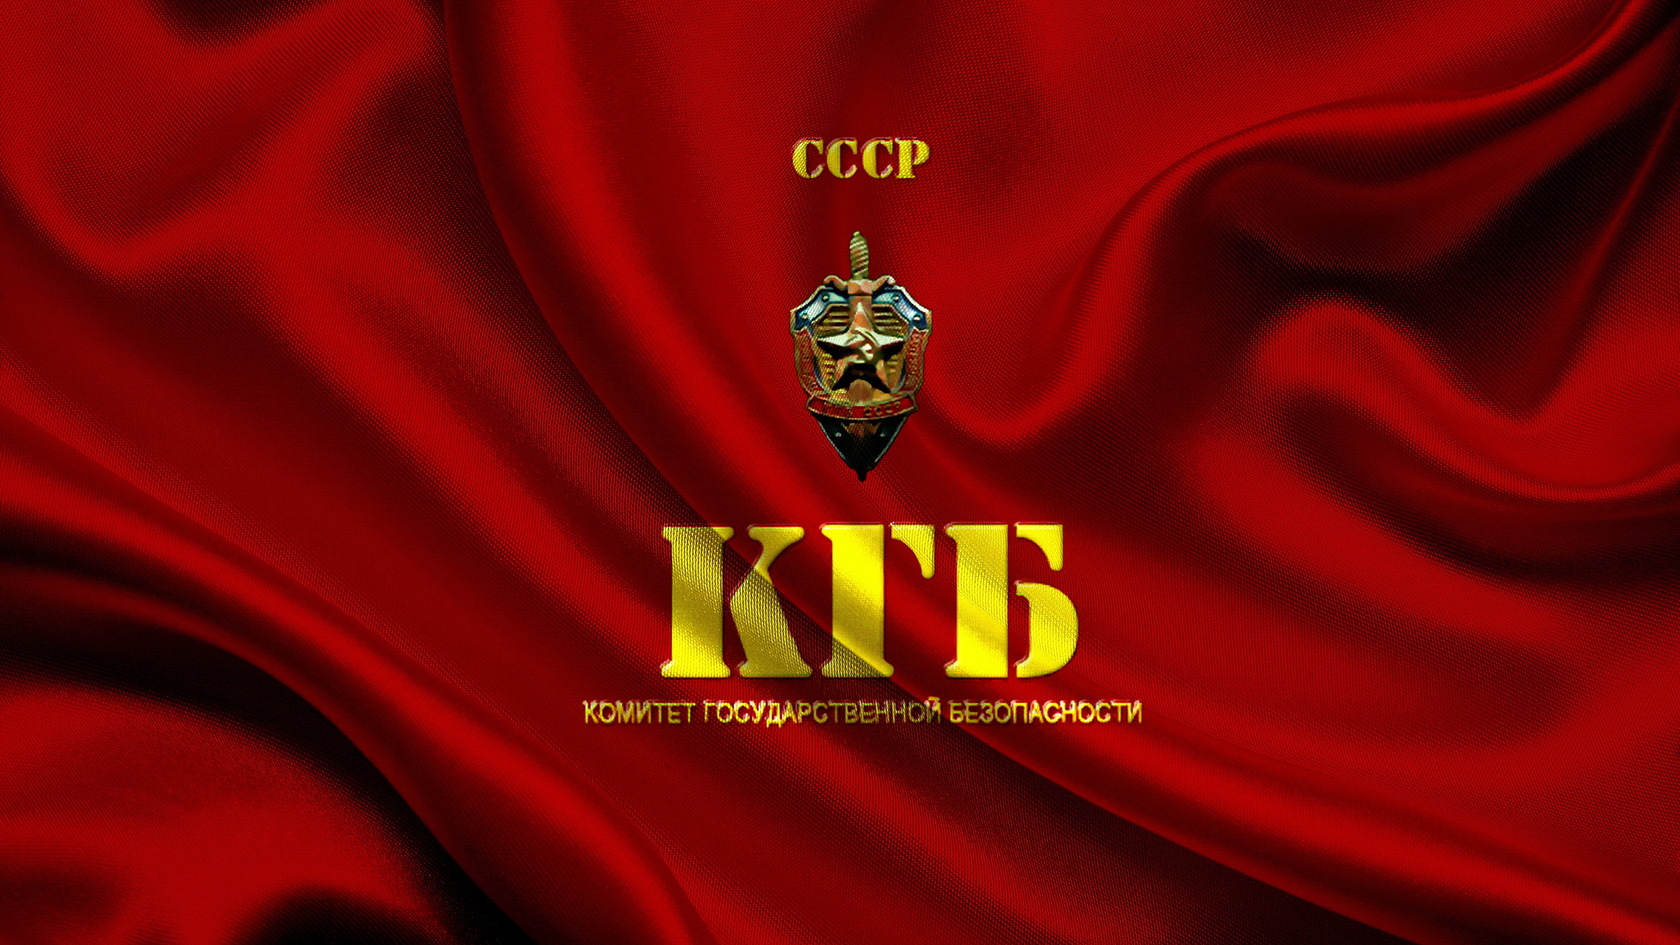 Государственой, Комитет, Безопасности, КГБ, Флаг Текстуры картинки, обои рабочий стол